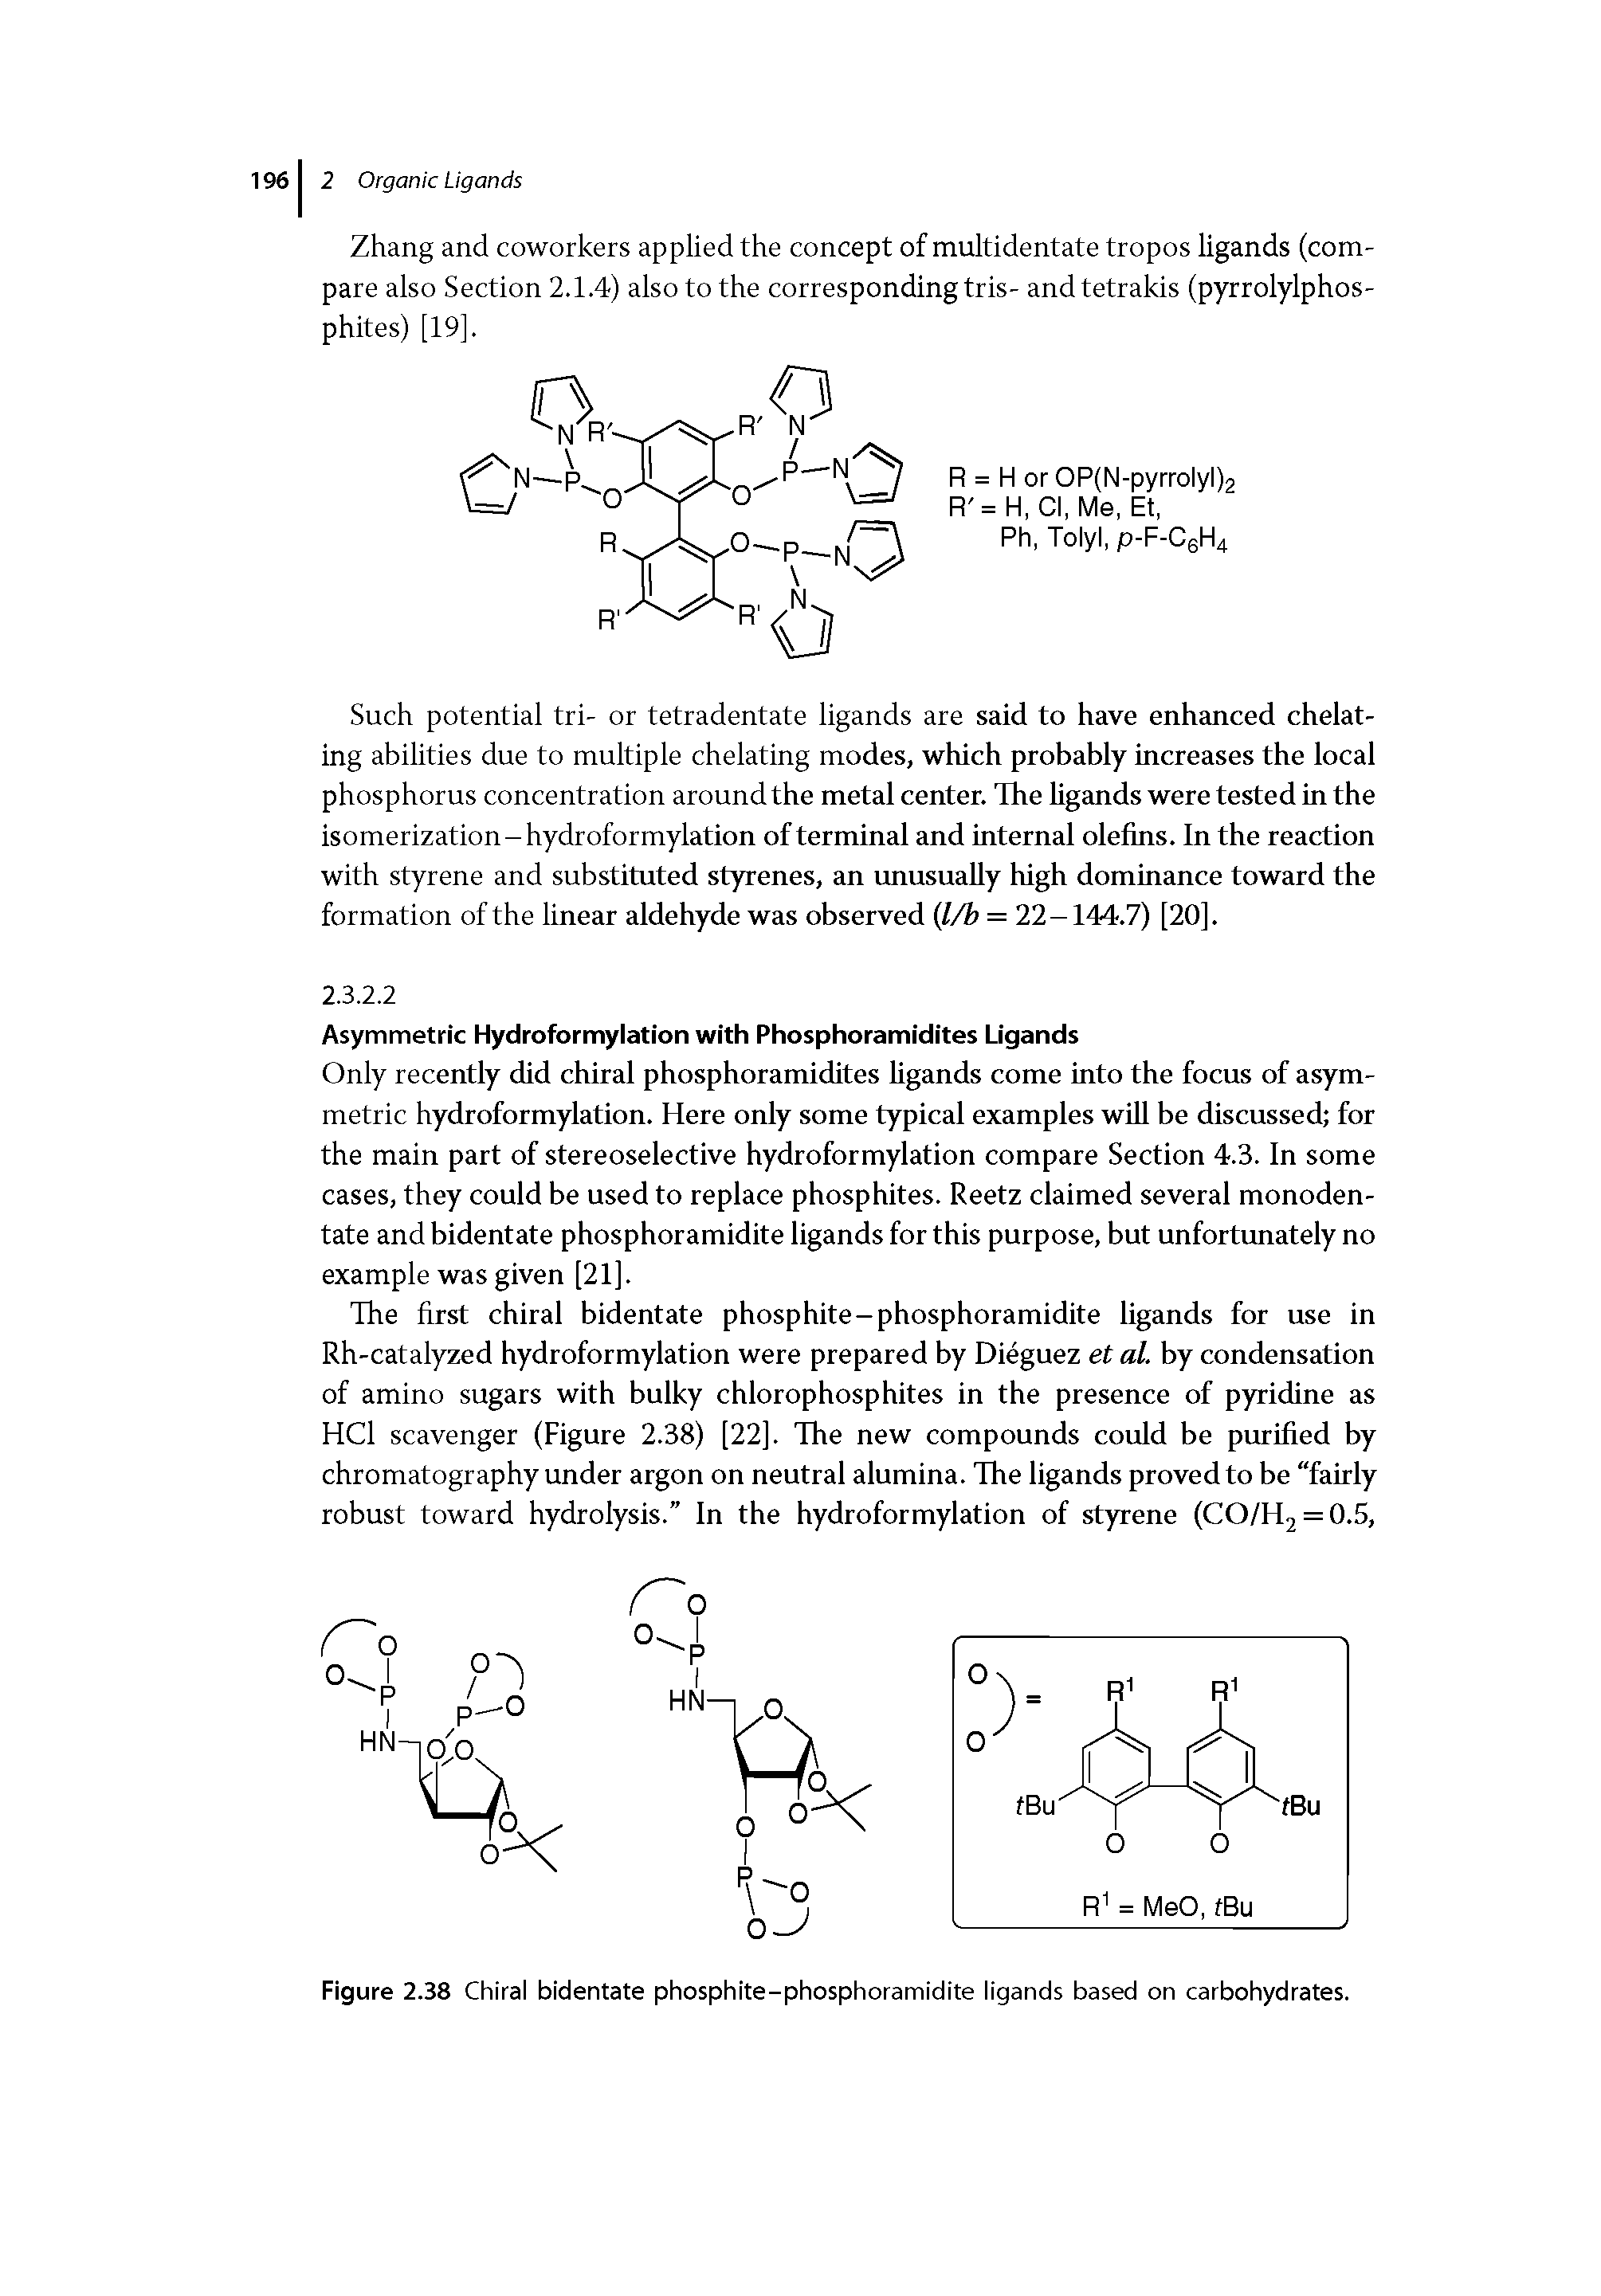 Figure 2.38 Chiral bidentate phosphite-phosphoramidite ligands based on carbohydrates.